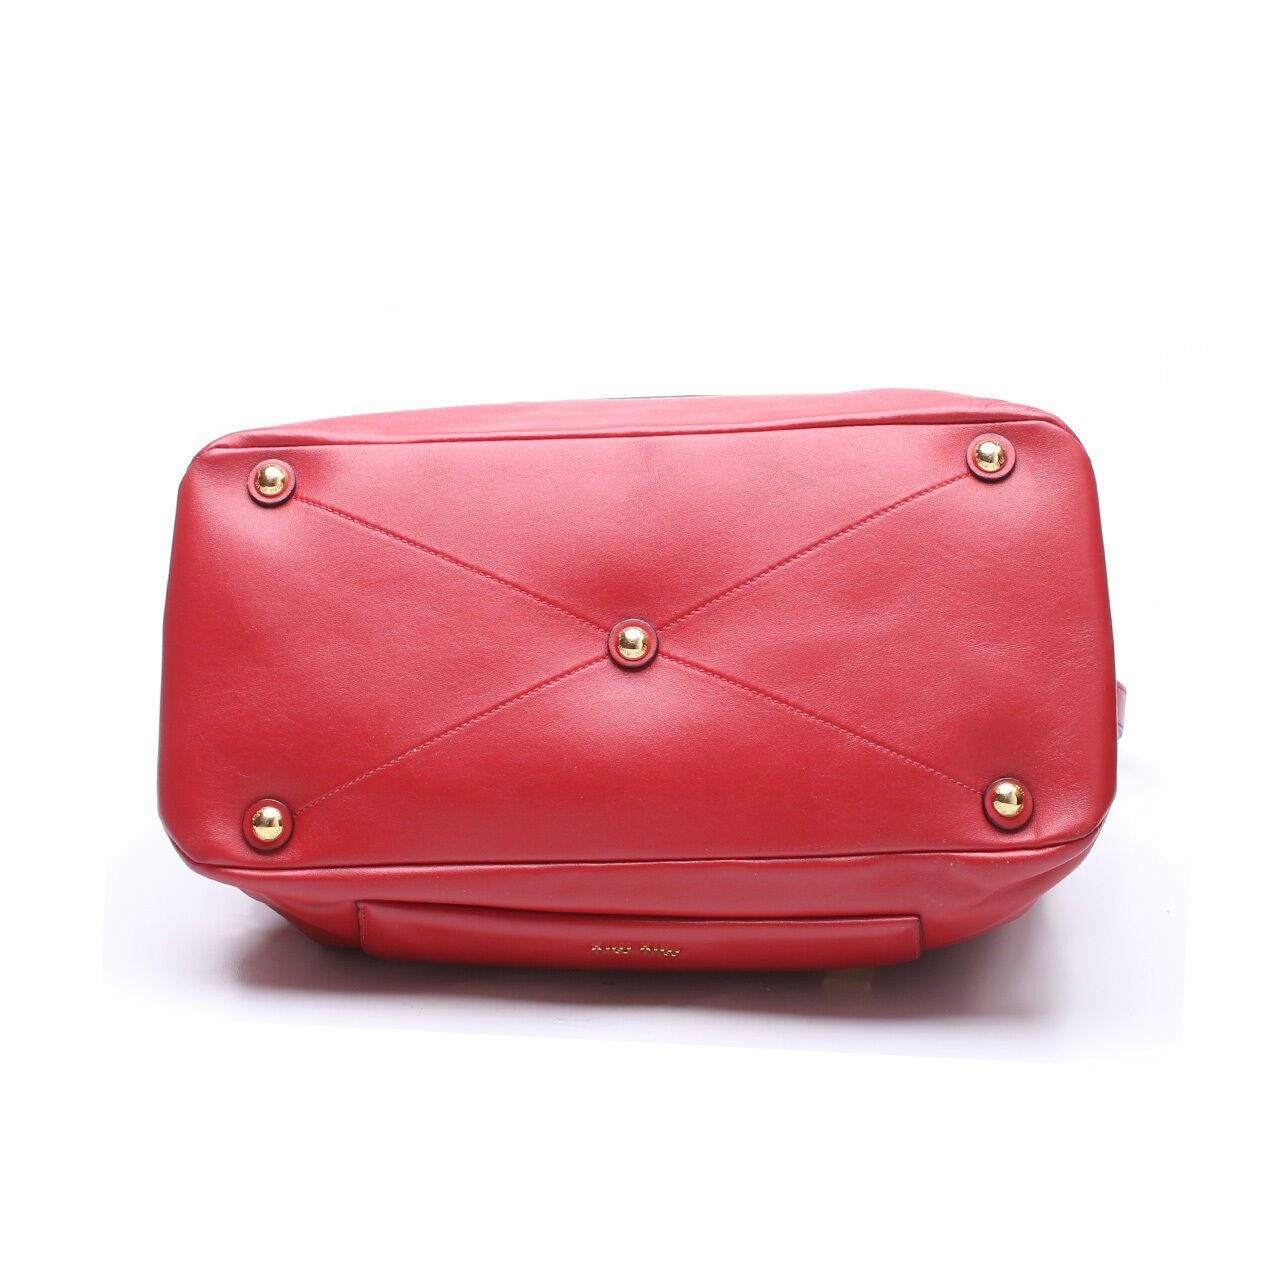 Miu Miu Fuoco Vitello Soft Leather Red Satchel Bag